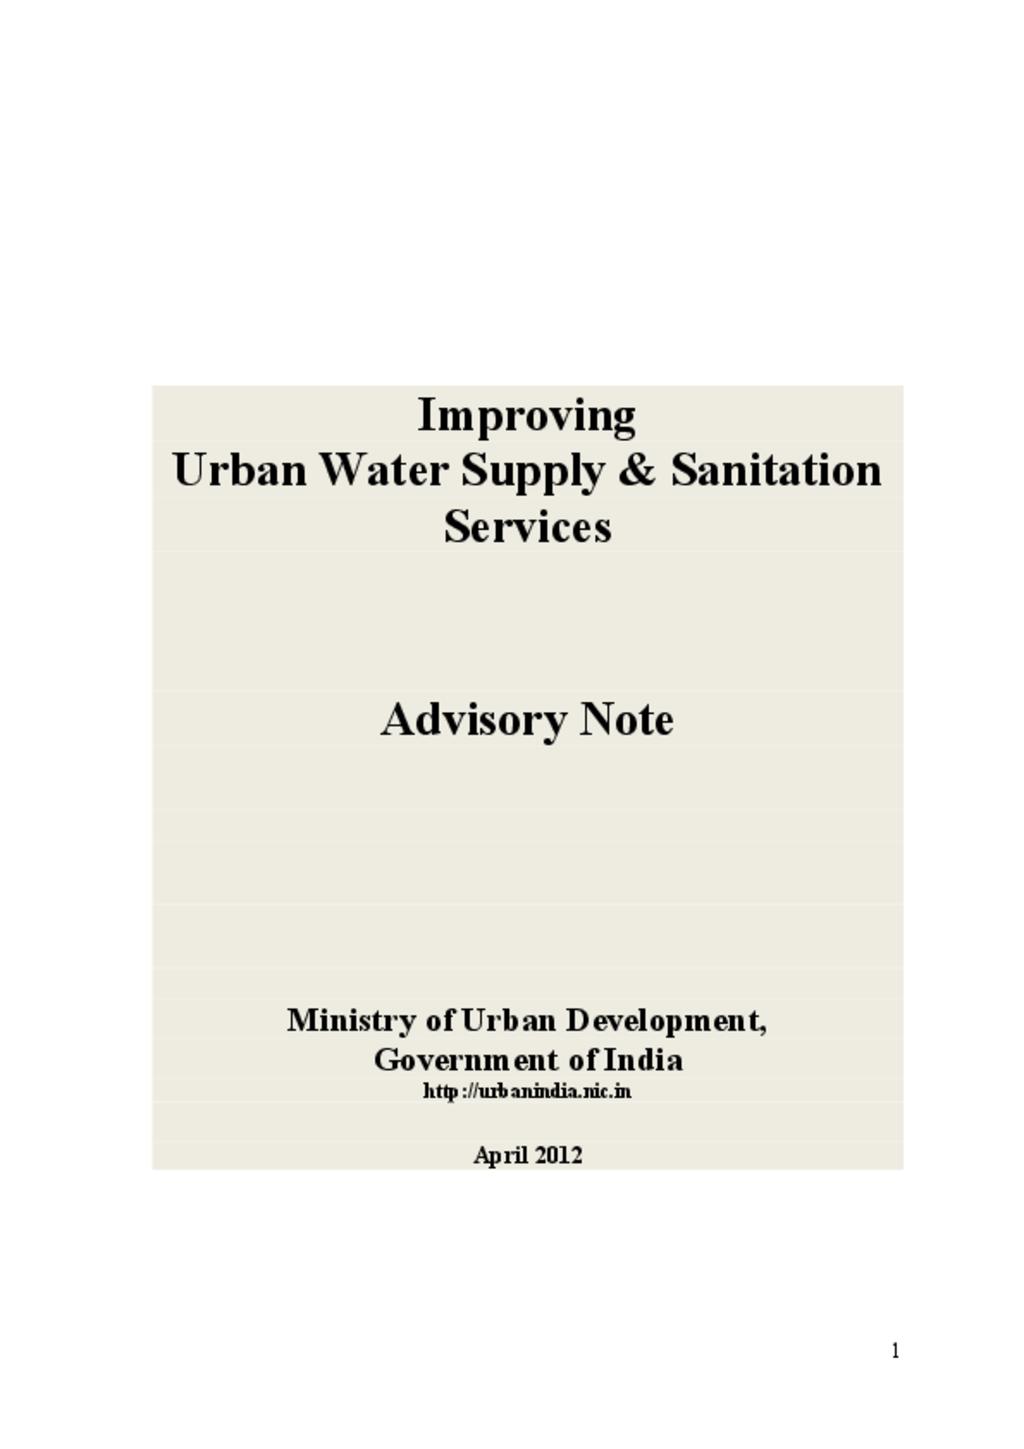 Improving Urban Water Supply & Sanitation Services